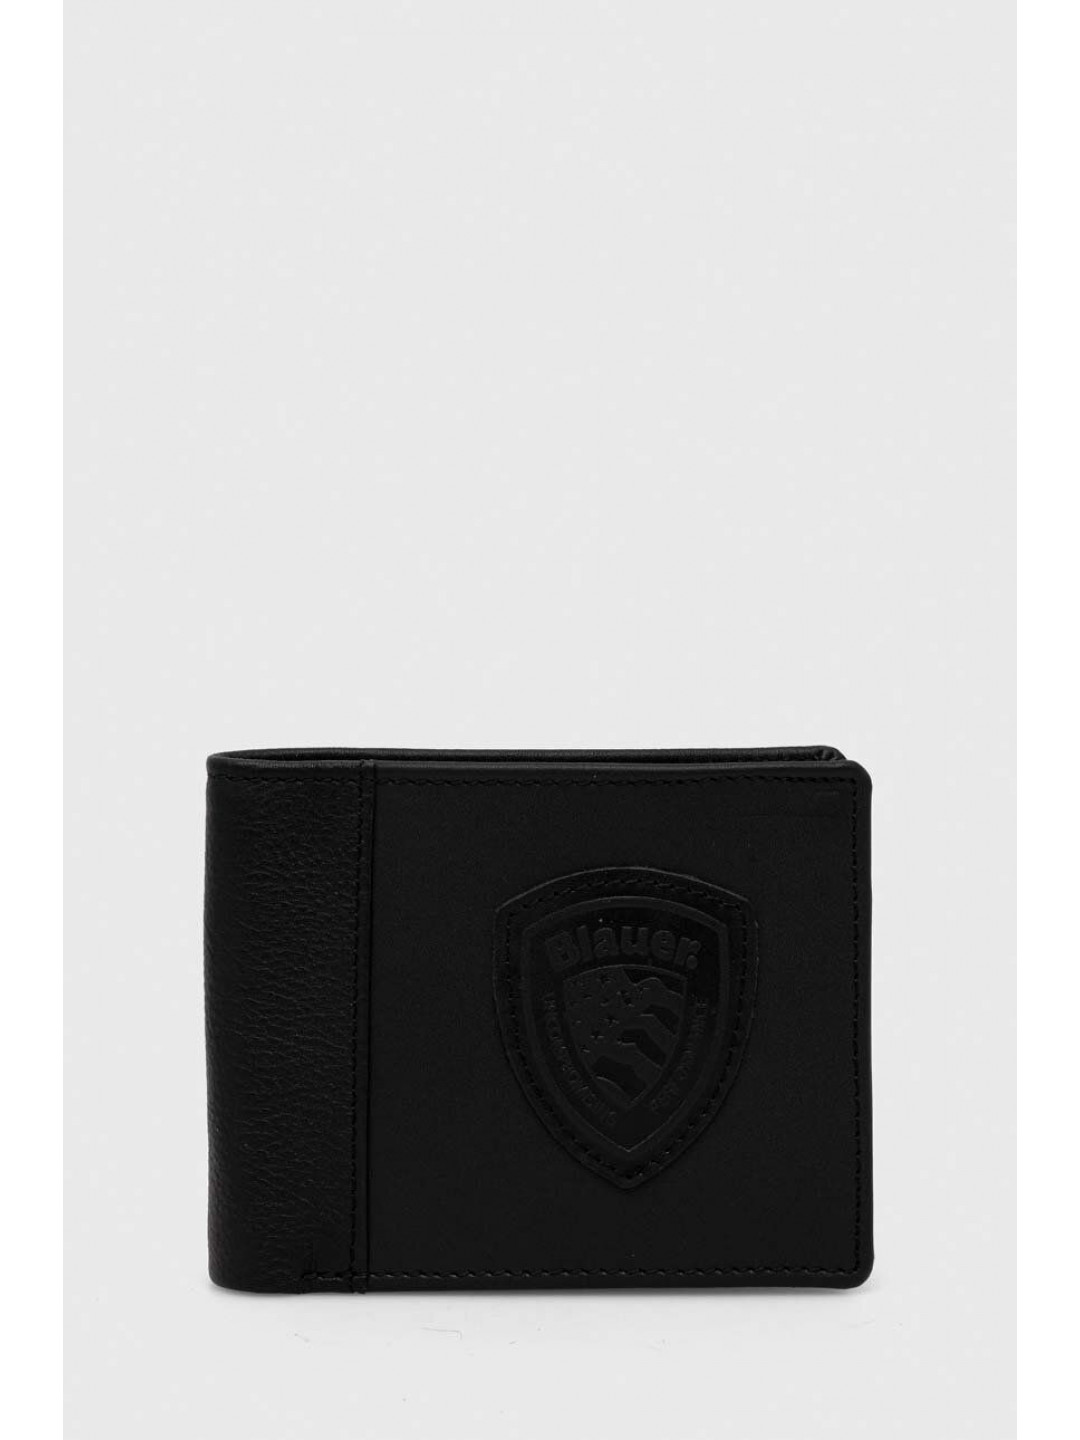 Kožená peněženka Blauer černá barva